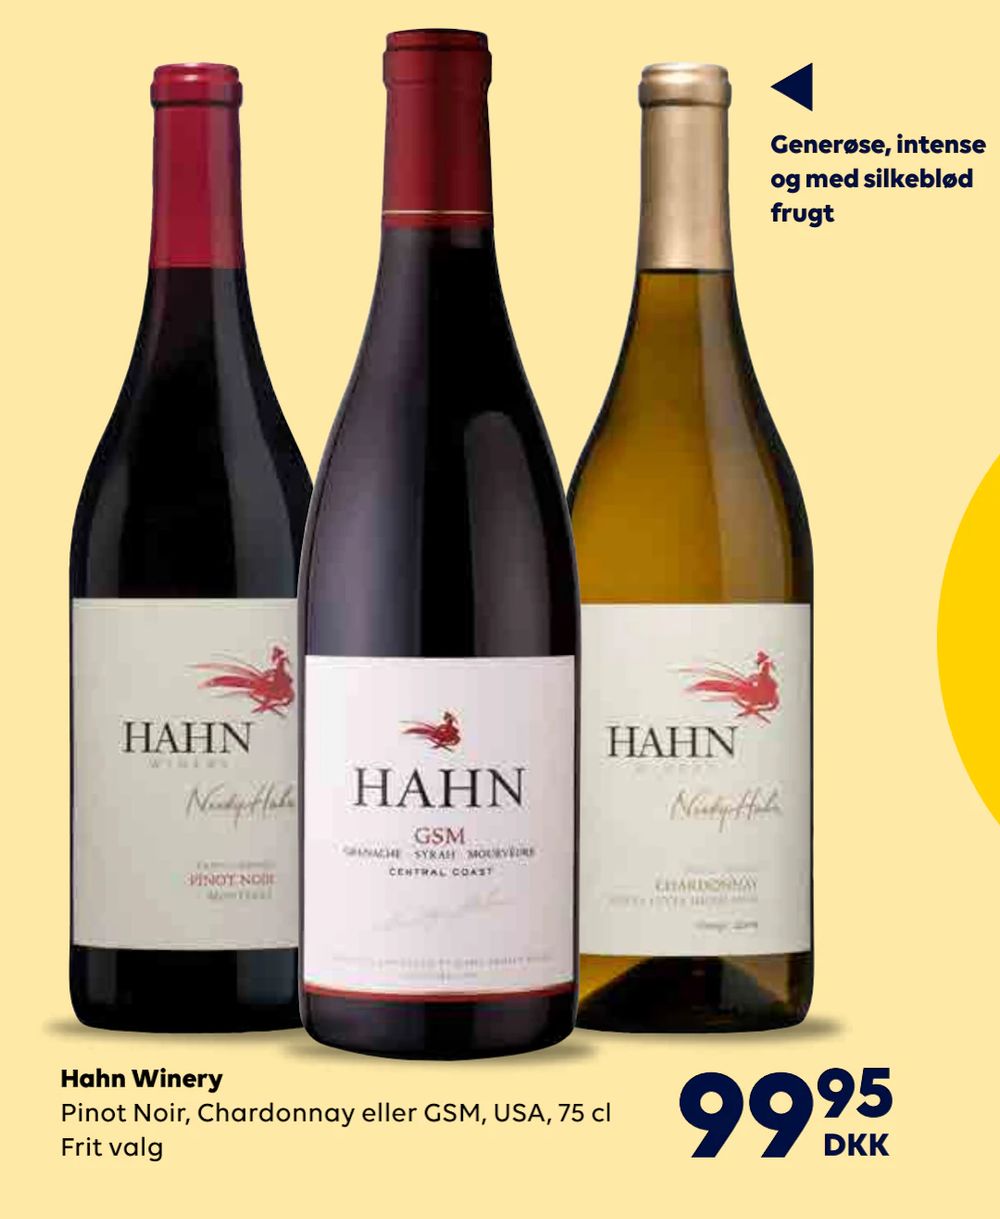 Tilbud på Hahn Winery fra BorderShop til 99,95 kr.